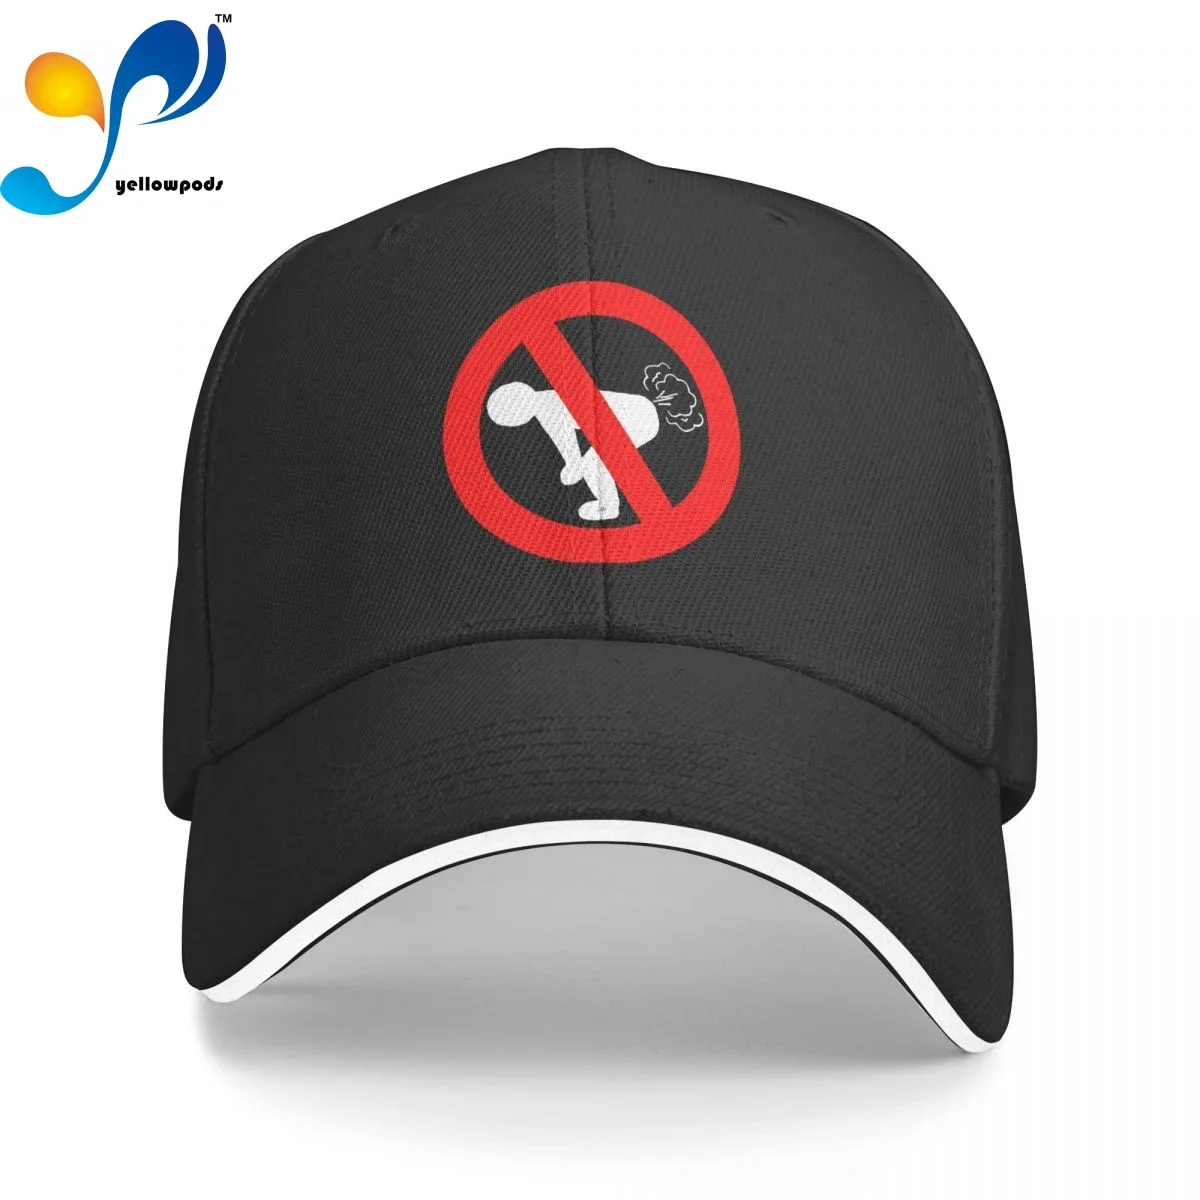 

No Farting Men's New Baseball Cap Fashion Sun Hats Caps for Men and Women